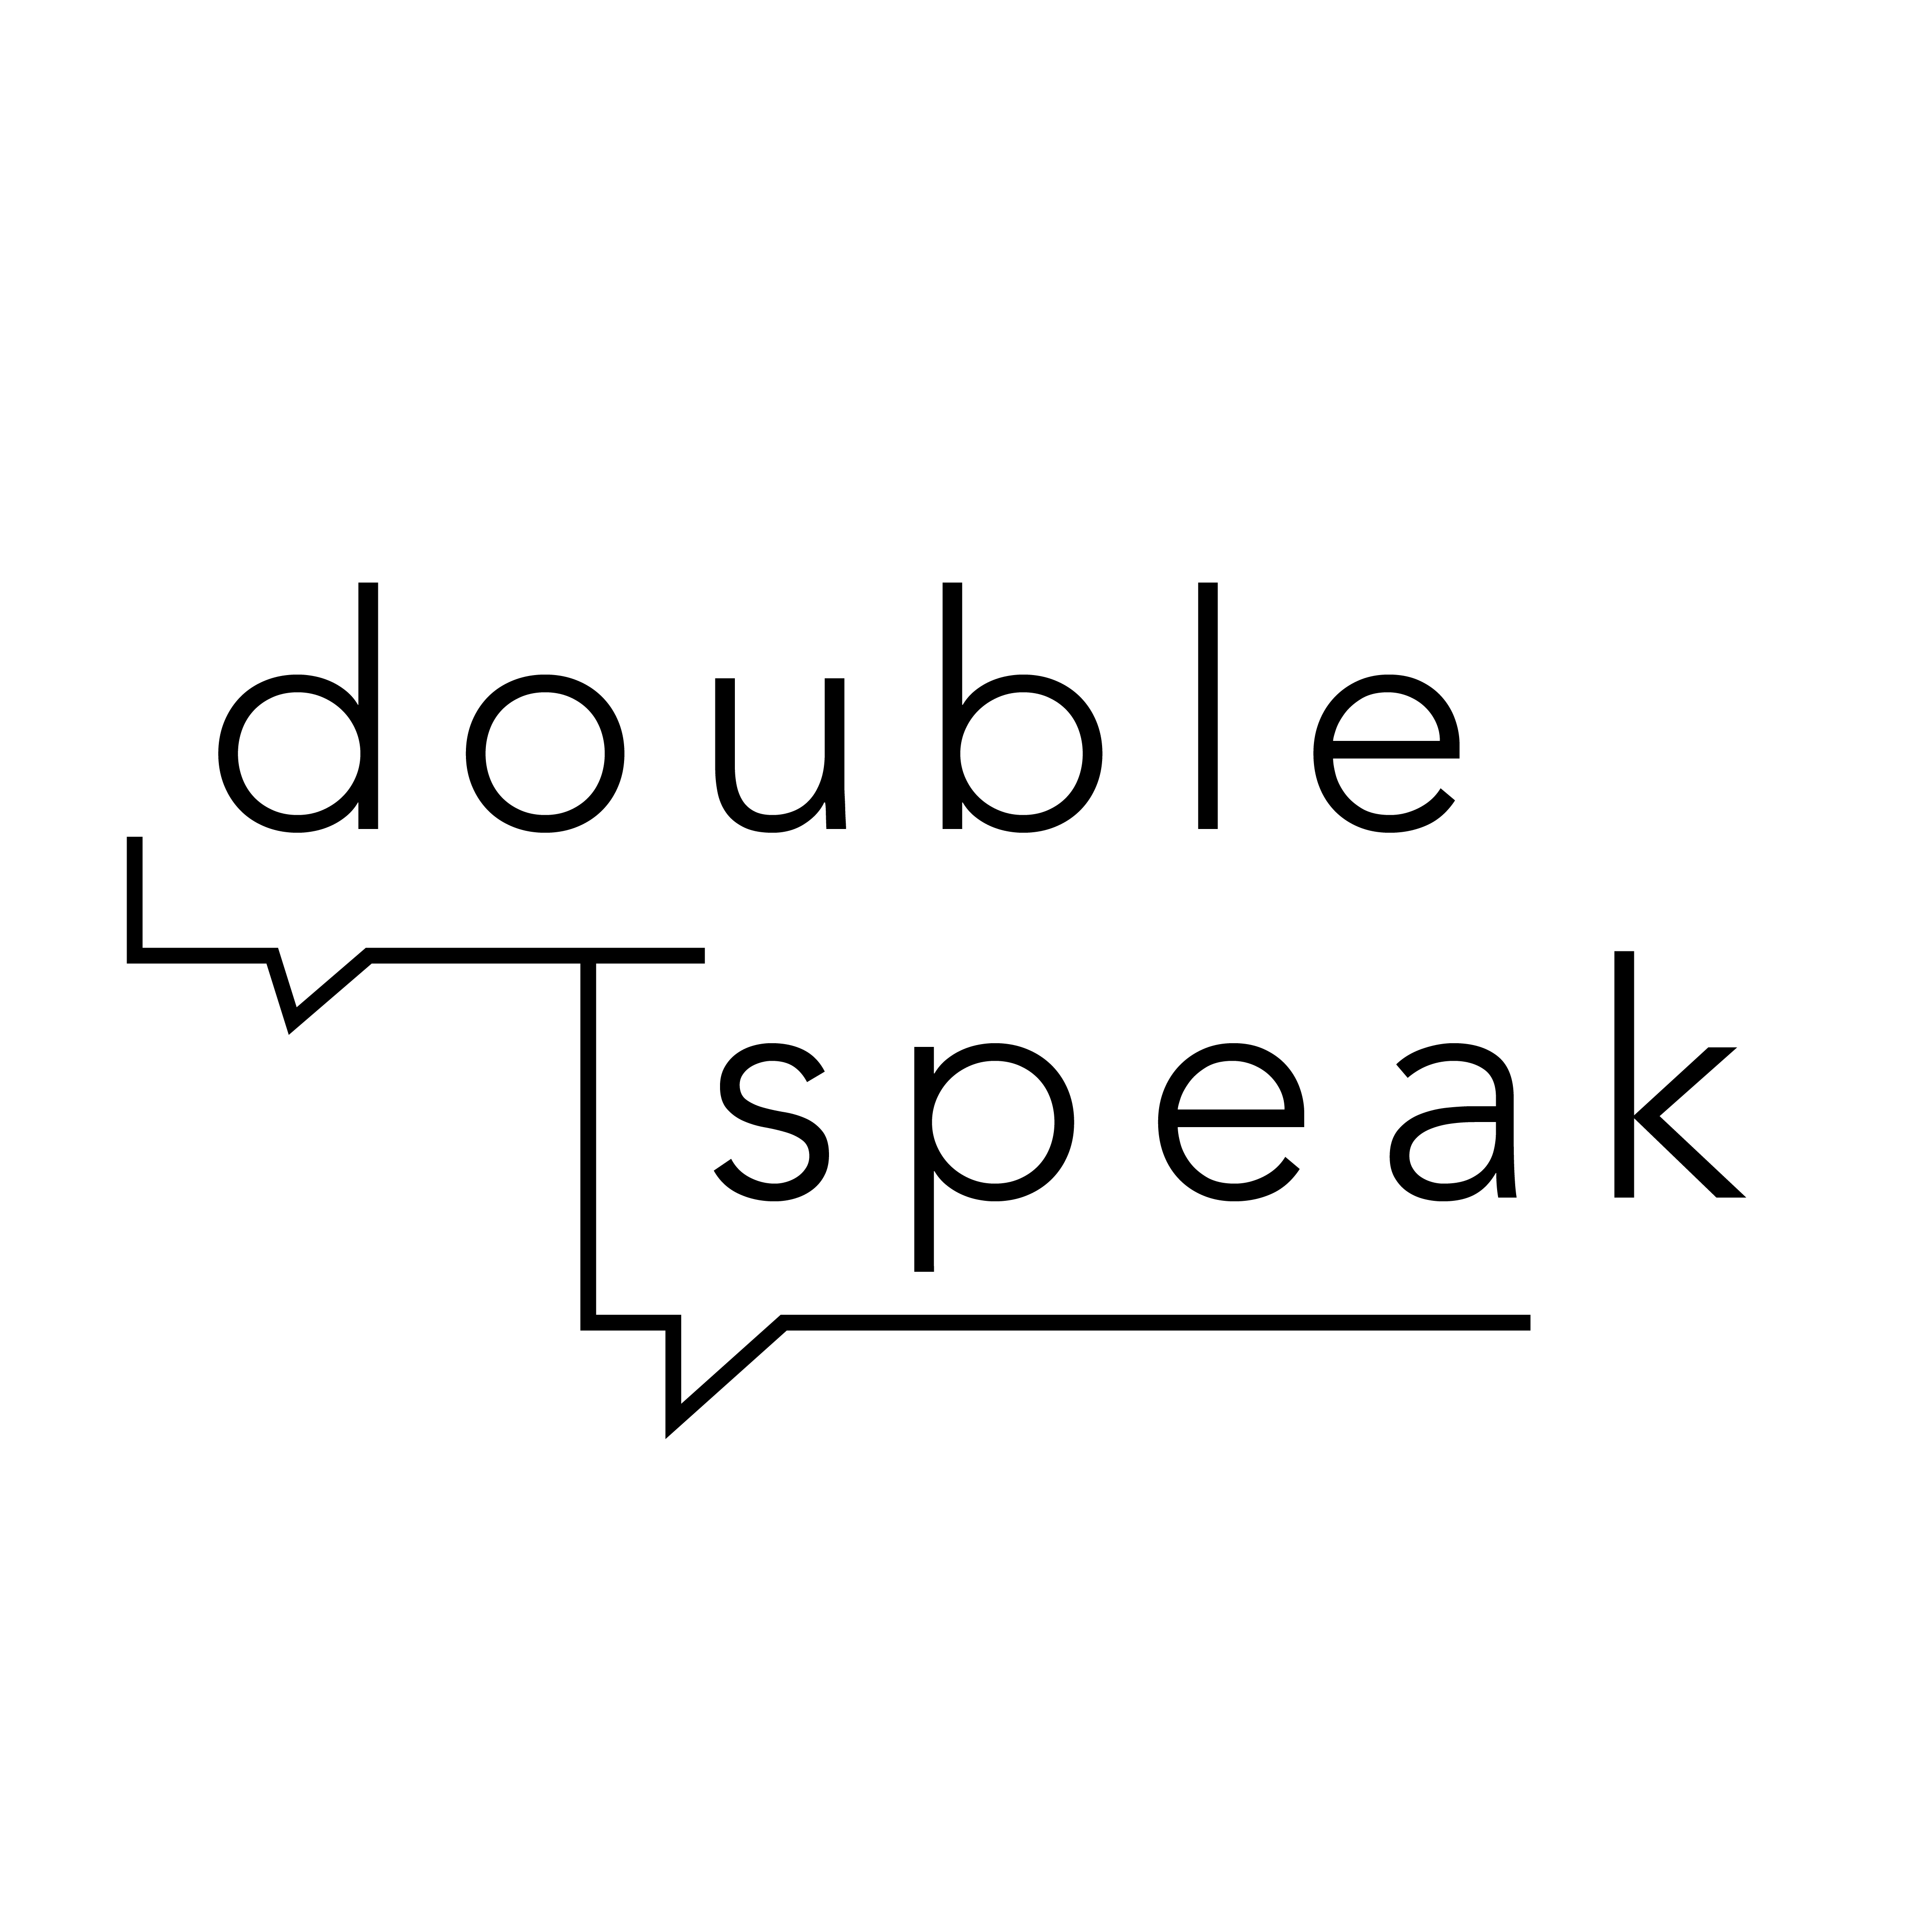 The DoubleSpeak logo.